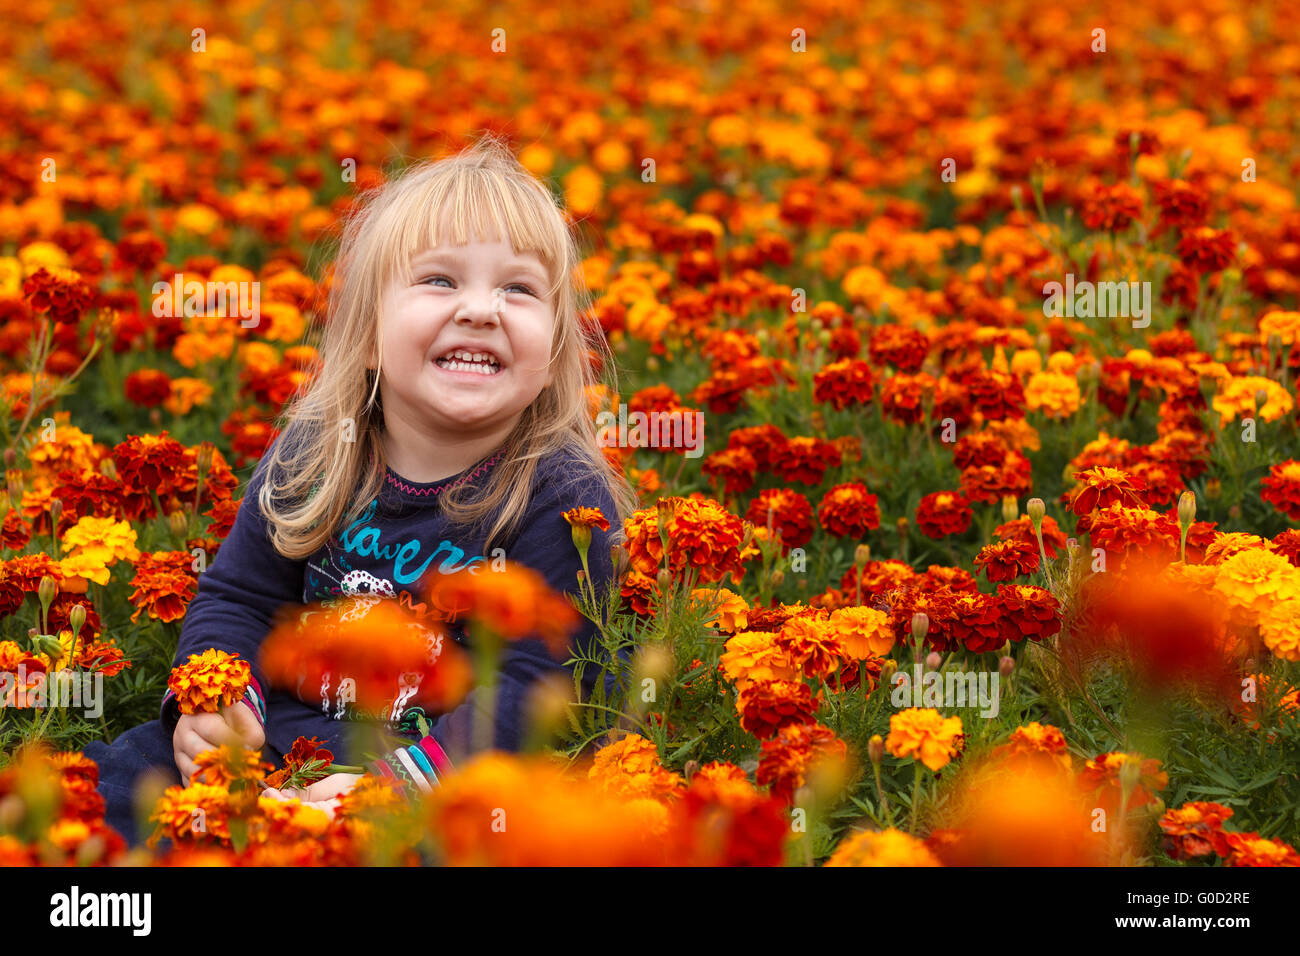 A girl in a flower field Stock Photo